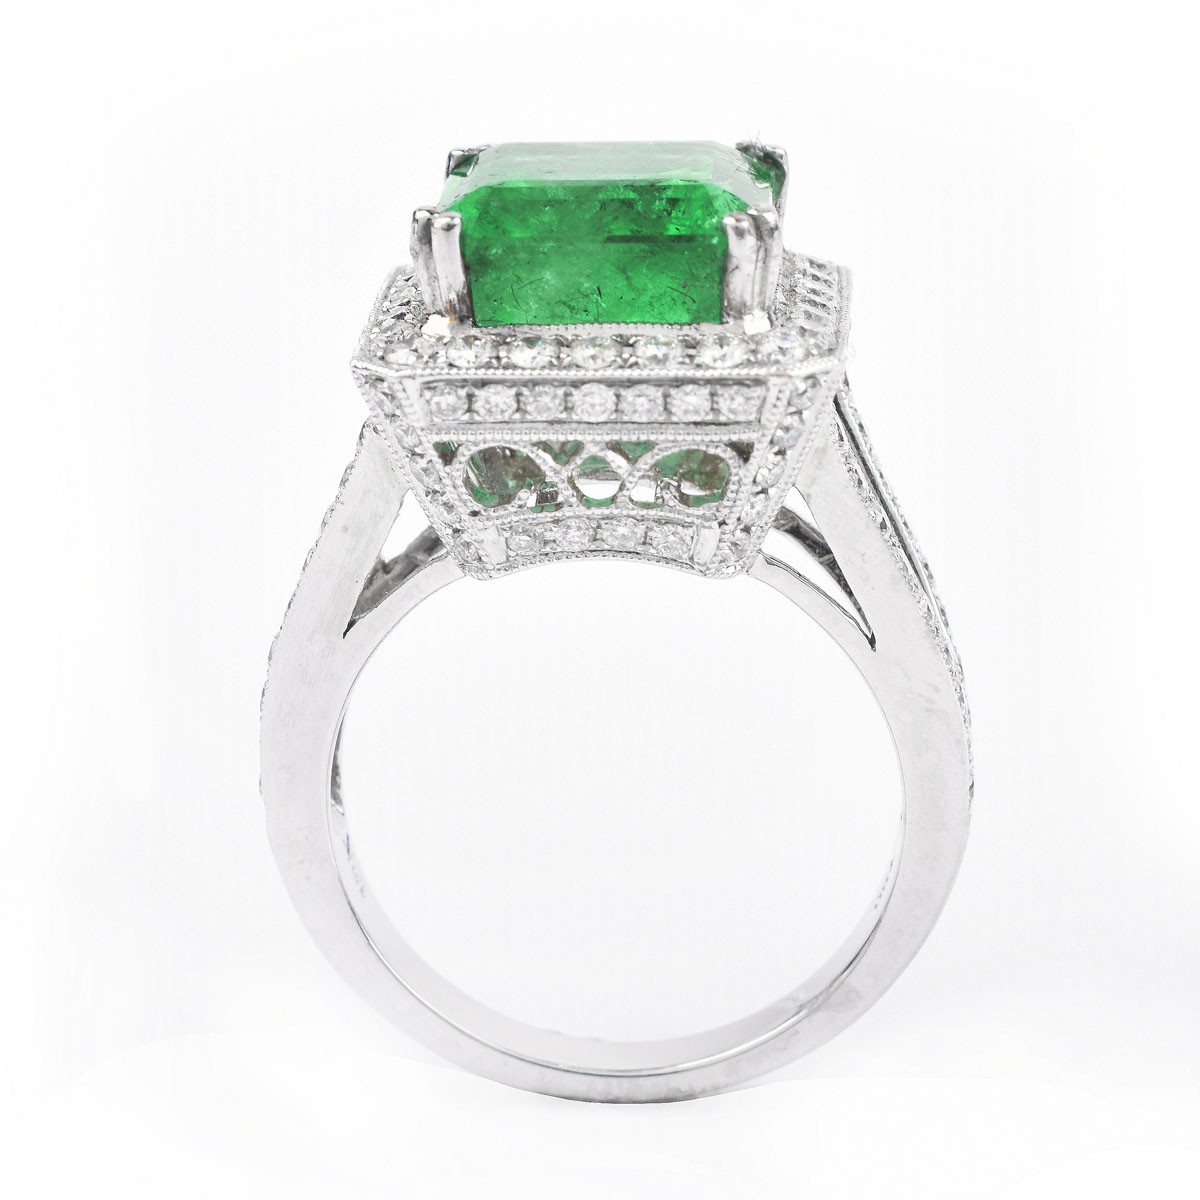 Approx. 6.35 Carat Colombian Emerald, 1.75 Carat Round Brilliant Cut Diamond and 18 Karat White Gold Ring.